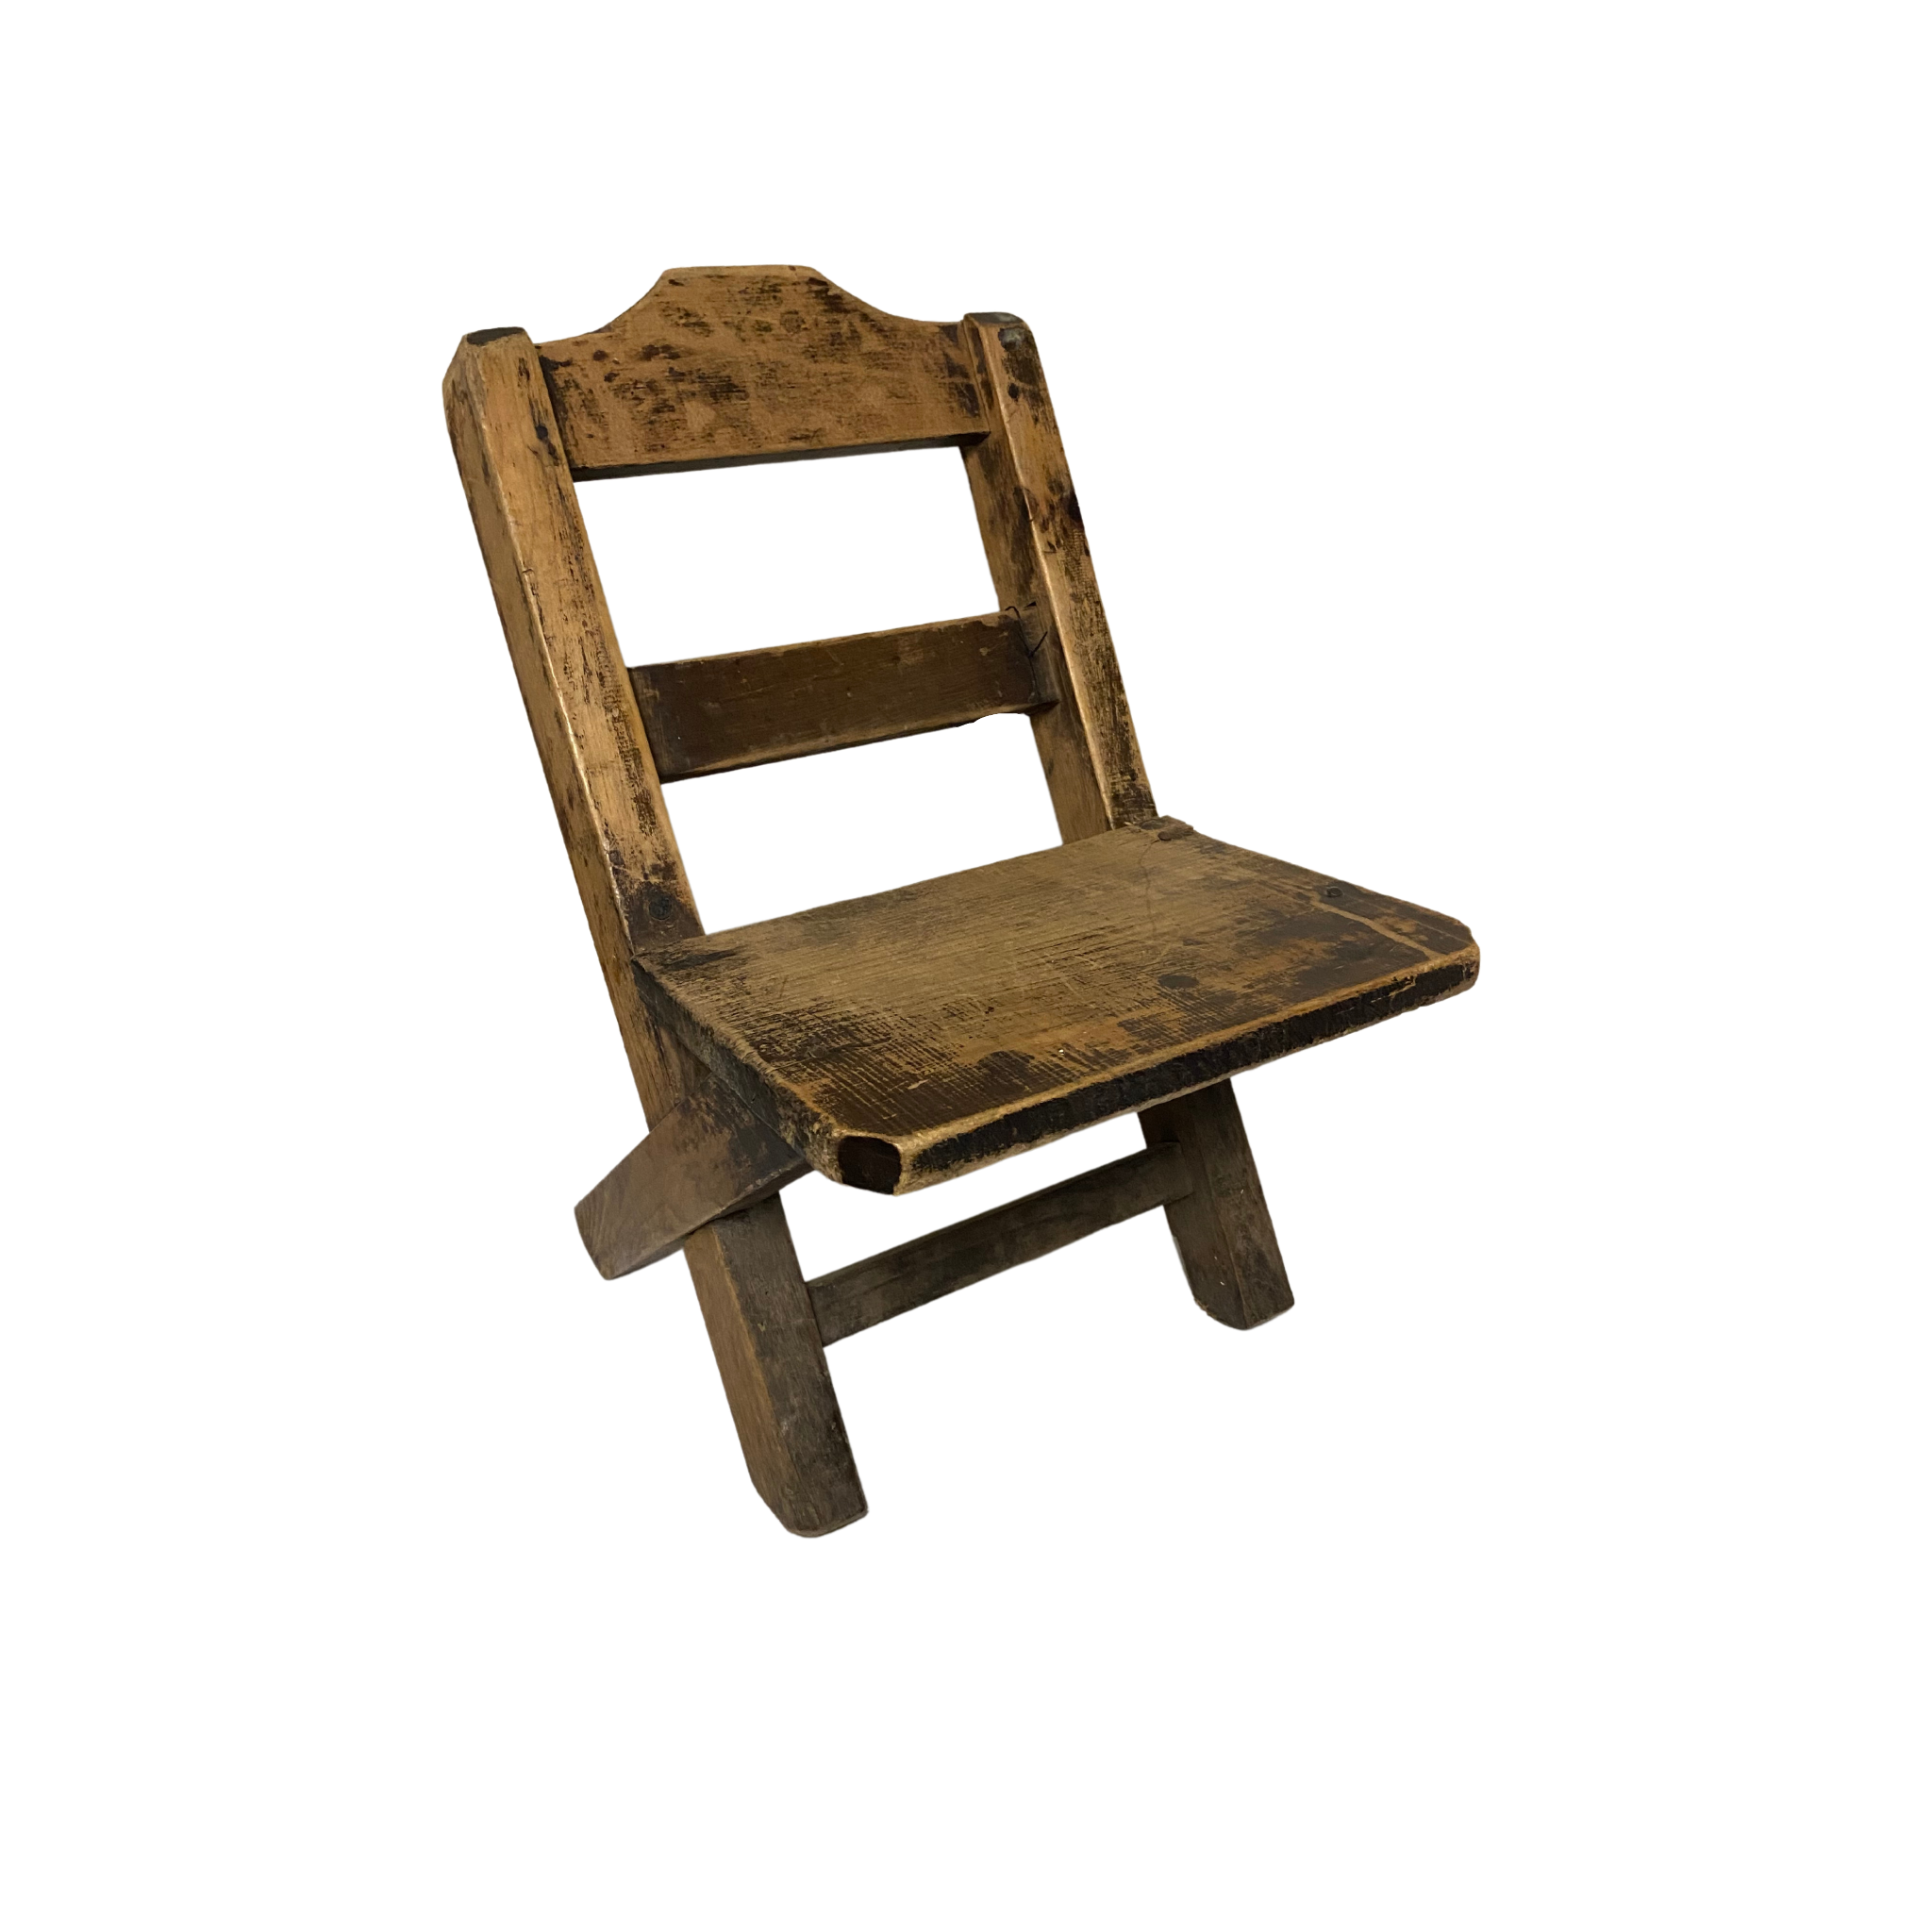 Antique Child Chair